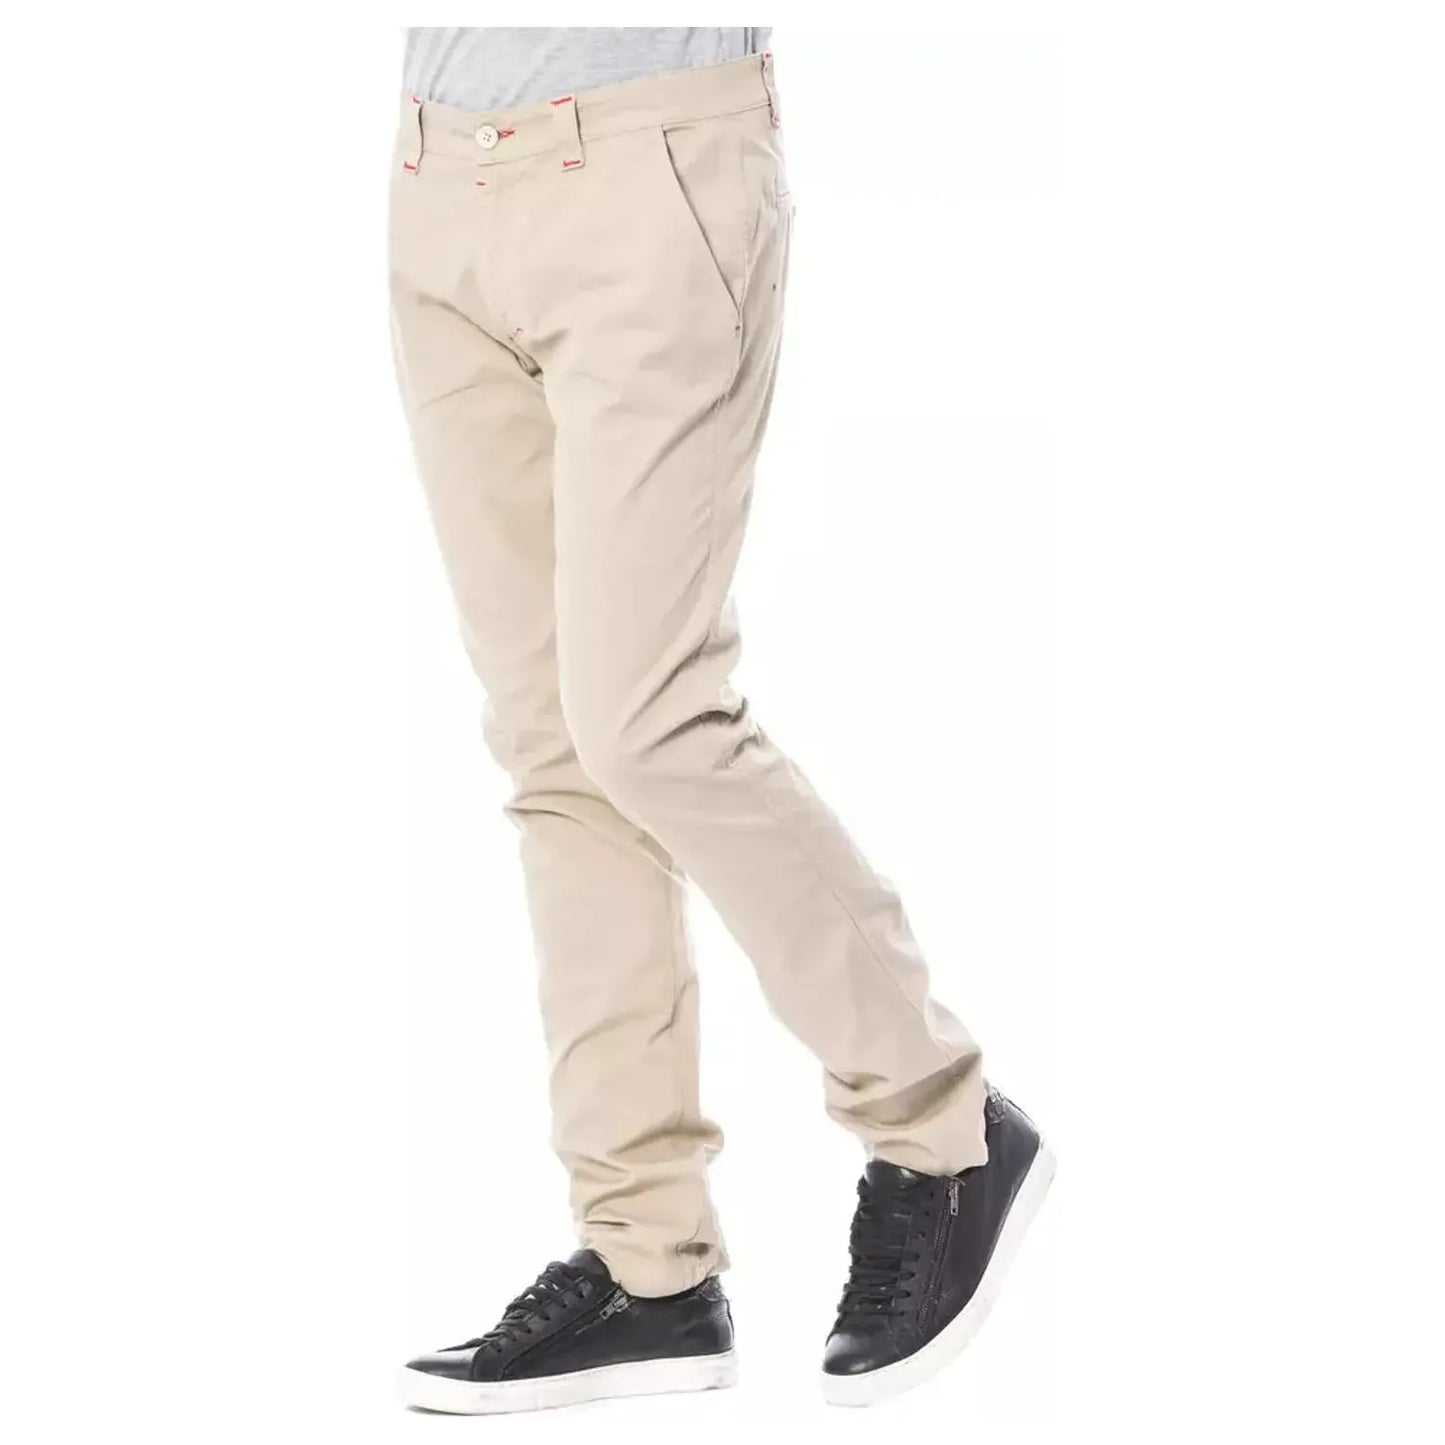 Verri Beige Slim Fit Chino Pants beige-cotton-jeans-pant-14 stock_product_image_18277_1321727494-17-58252cd7-694.webp